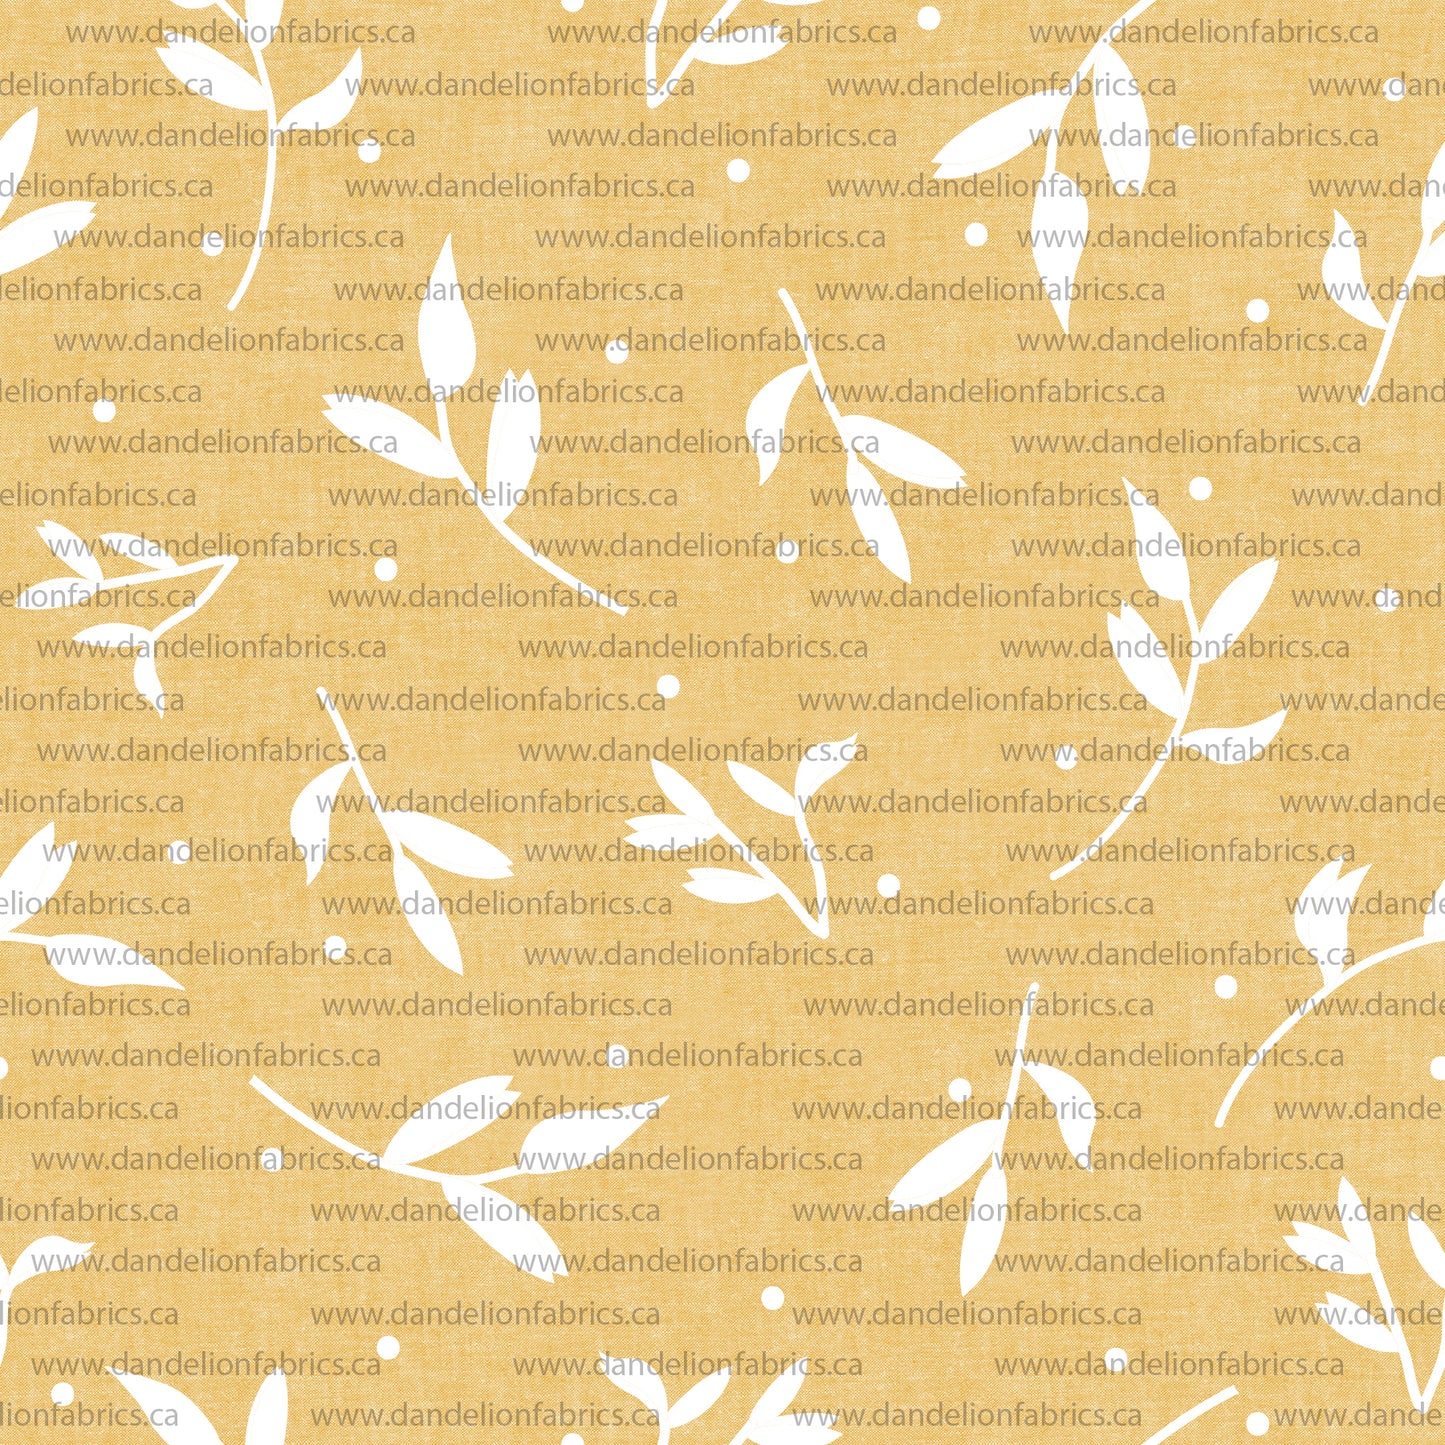 Gigi in Lemon Yellow | Mini Rib Knit Fabric | SOLD BY THE FULL BOLT